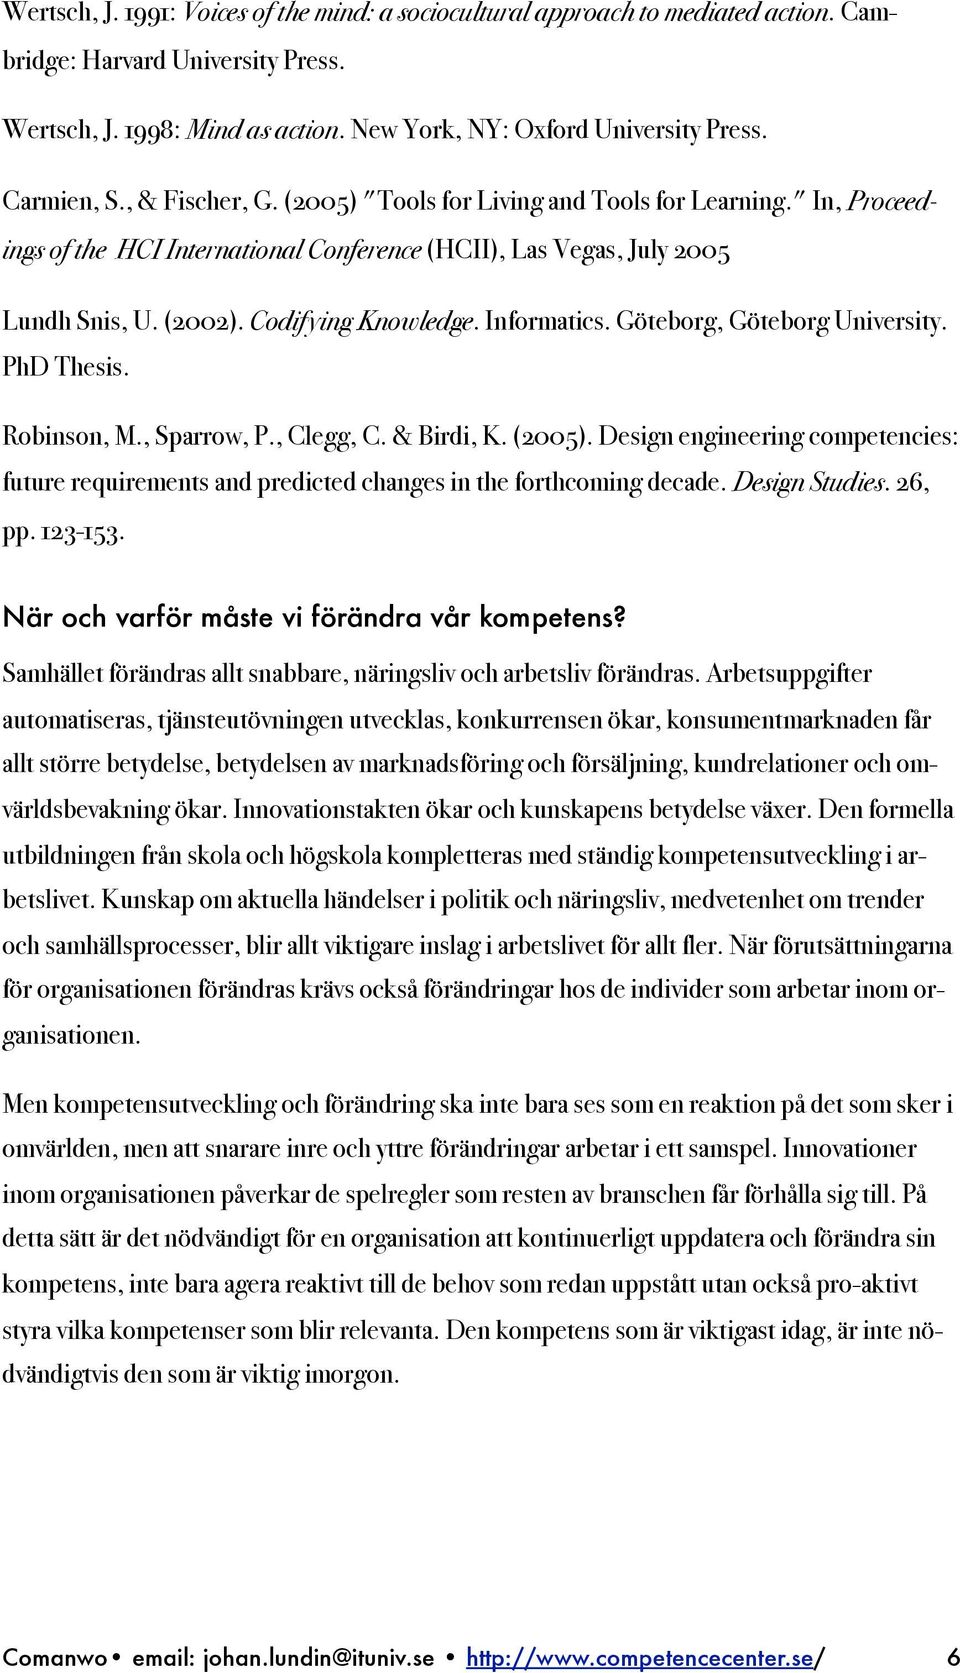 Codifying Knowledge. Informatics. Göteborg, Göteborg University. PhD Thesis. Robinson, M., Sparrow, P., Clegg, C. & Birdi, K. (2005).